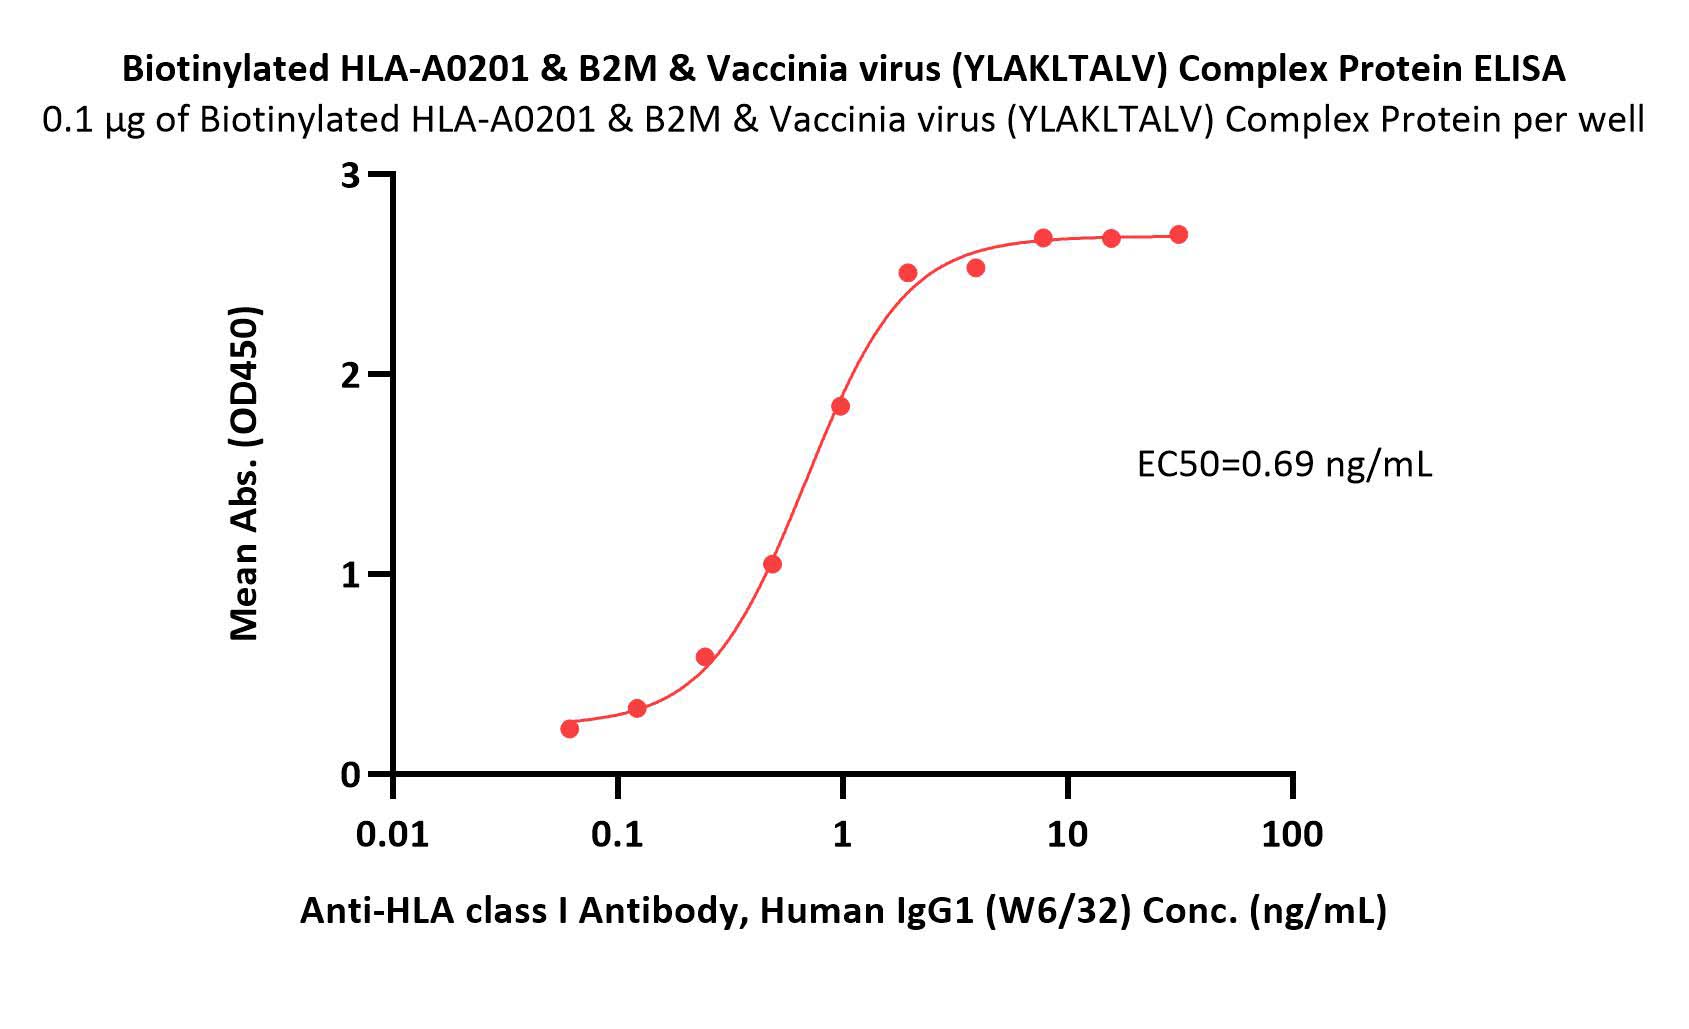 HLA-A*0201 & B2M & Vaccinia virus (YLAKLTALV) ELISA